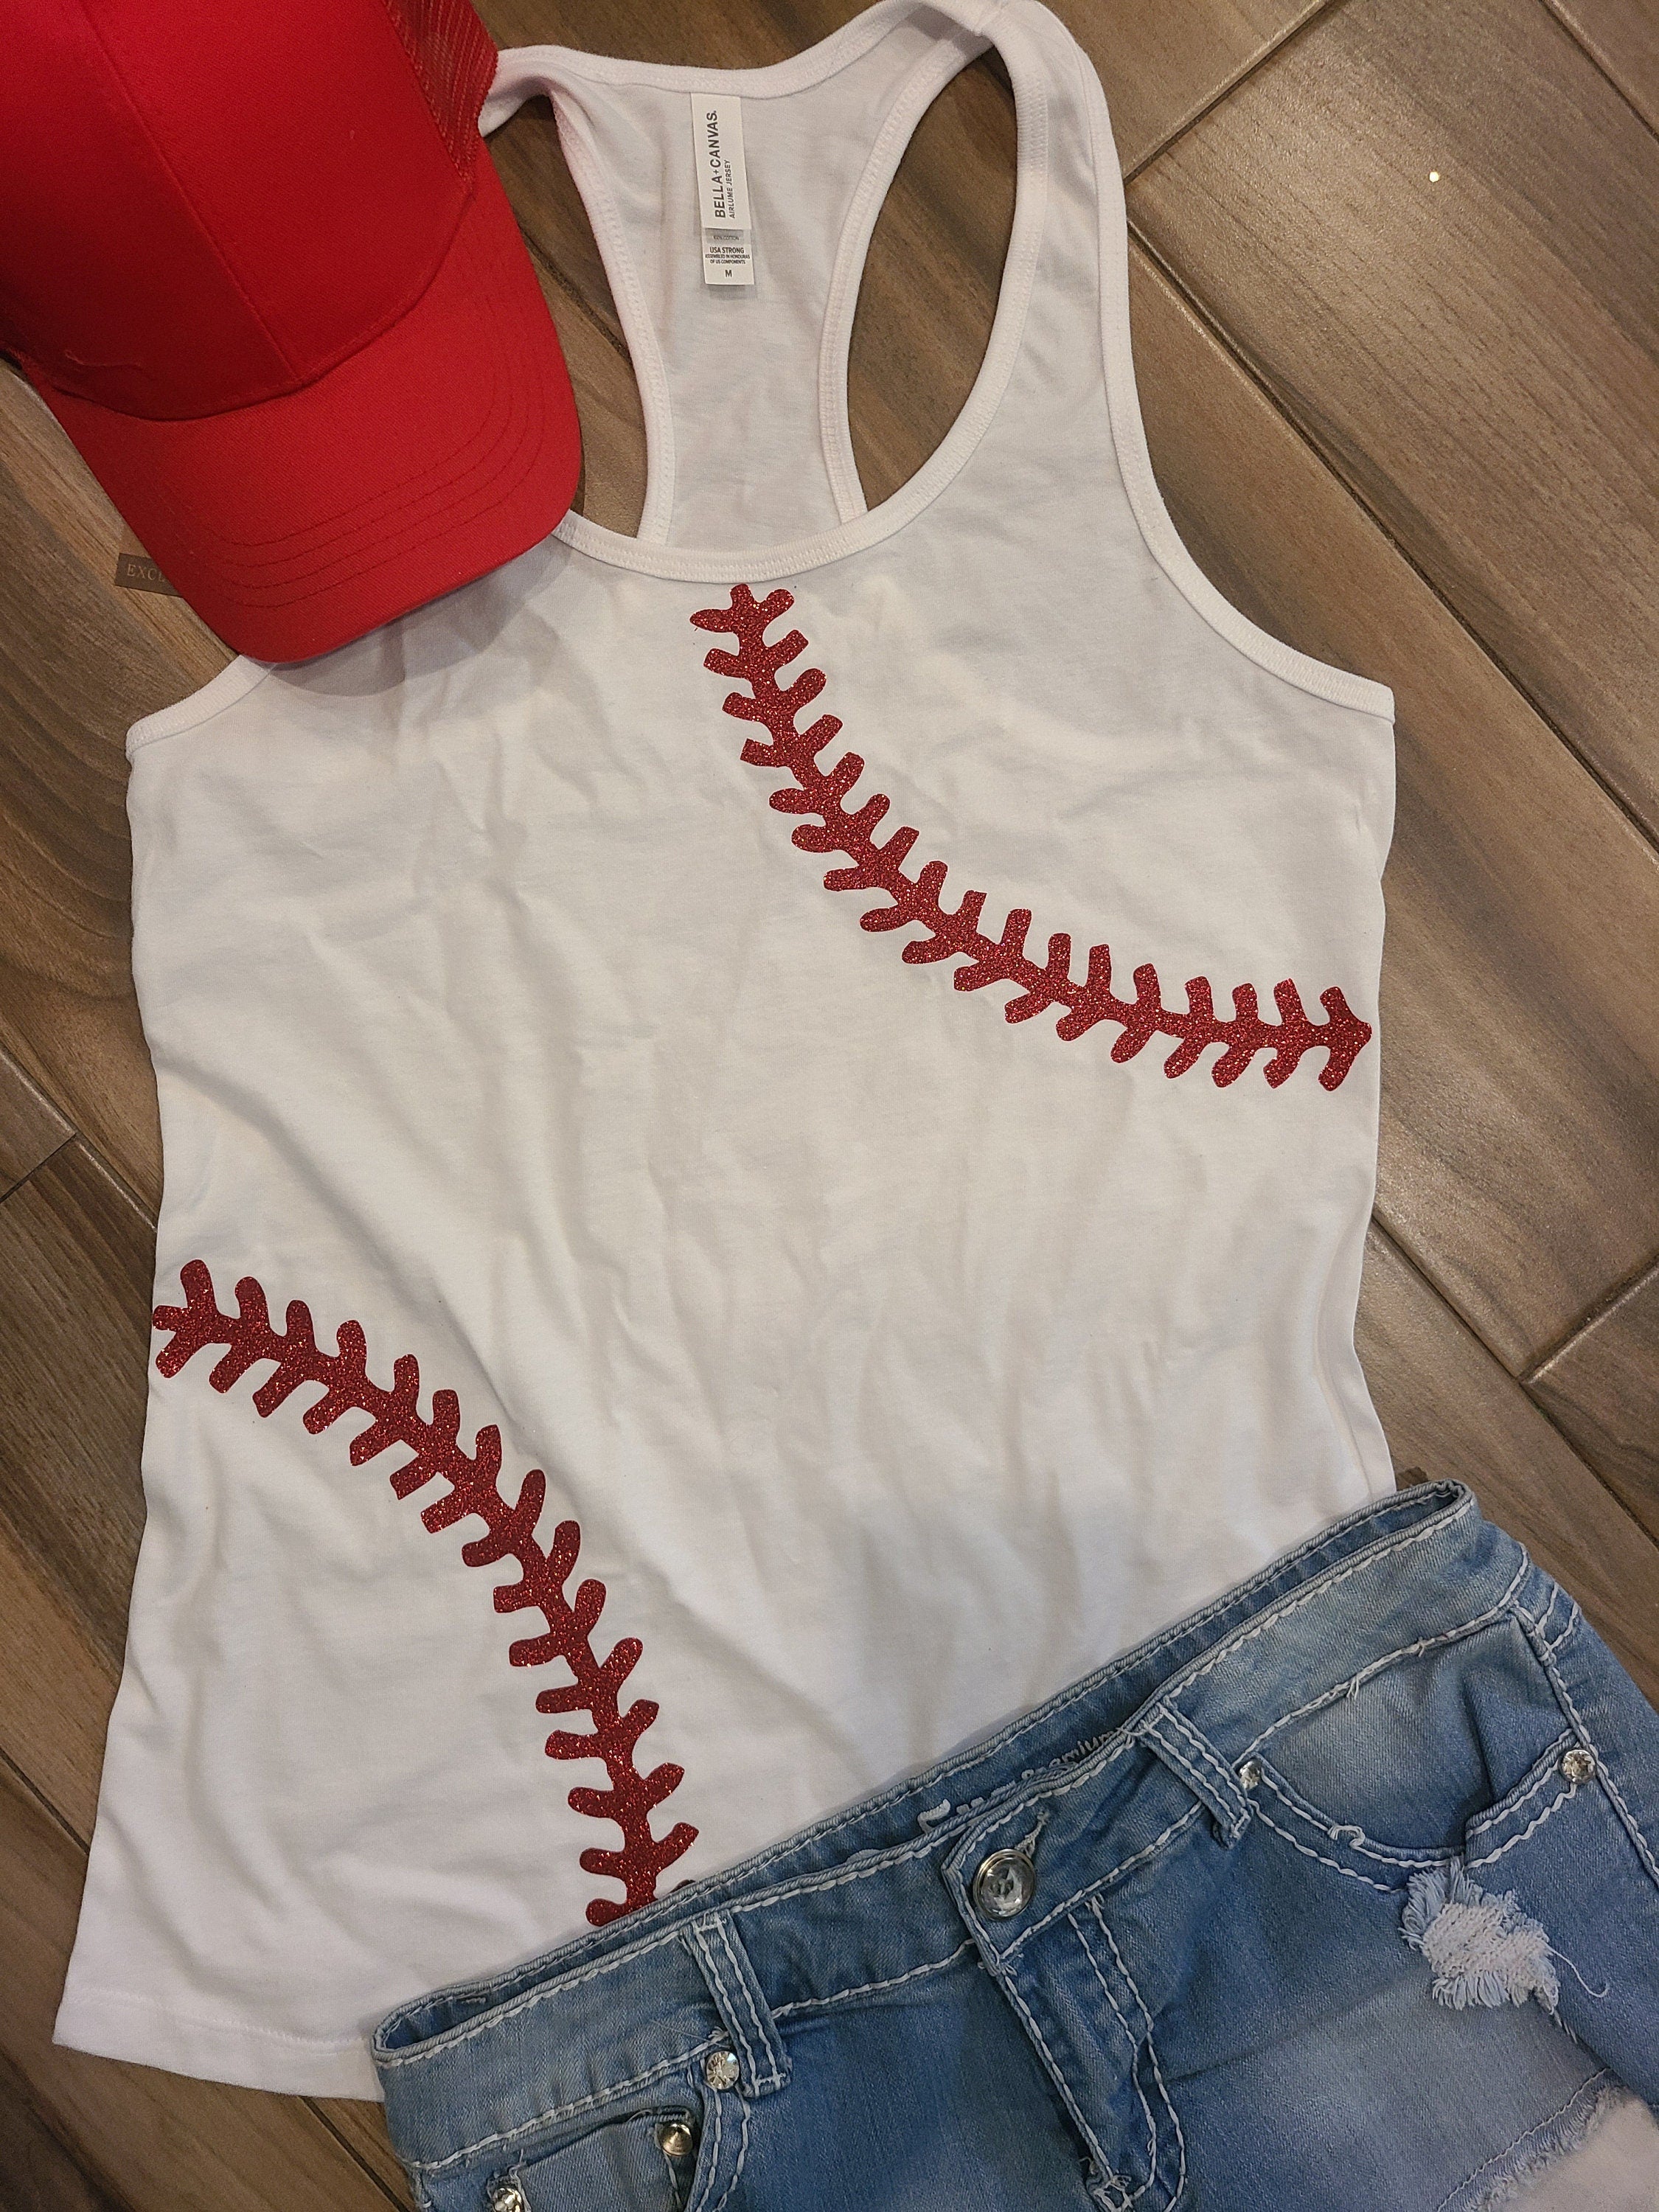 Lulu Grace Designs Boston Red Sox Inspired Glitter Shirt or Tank Top: Baseball Fan Gear & Apparel for Women Ladies Crew Neck L/S / Large